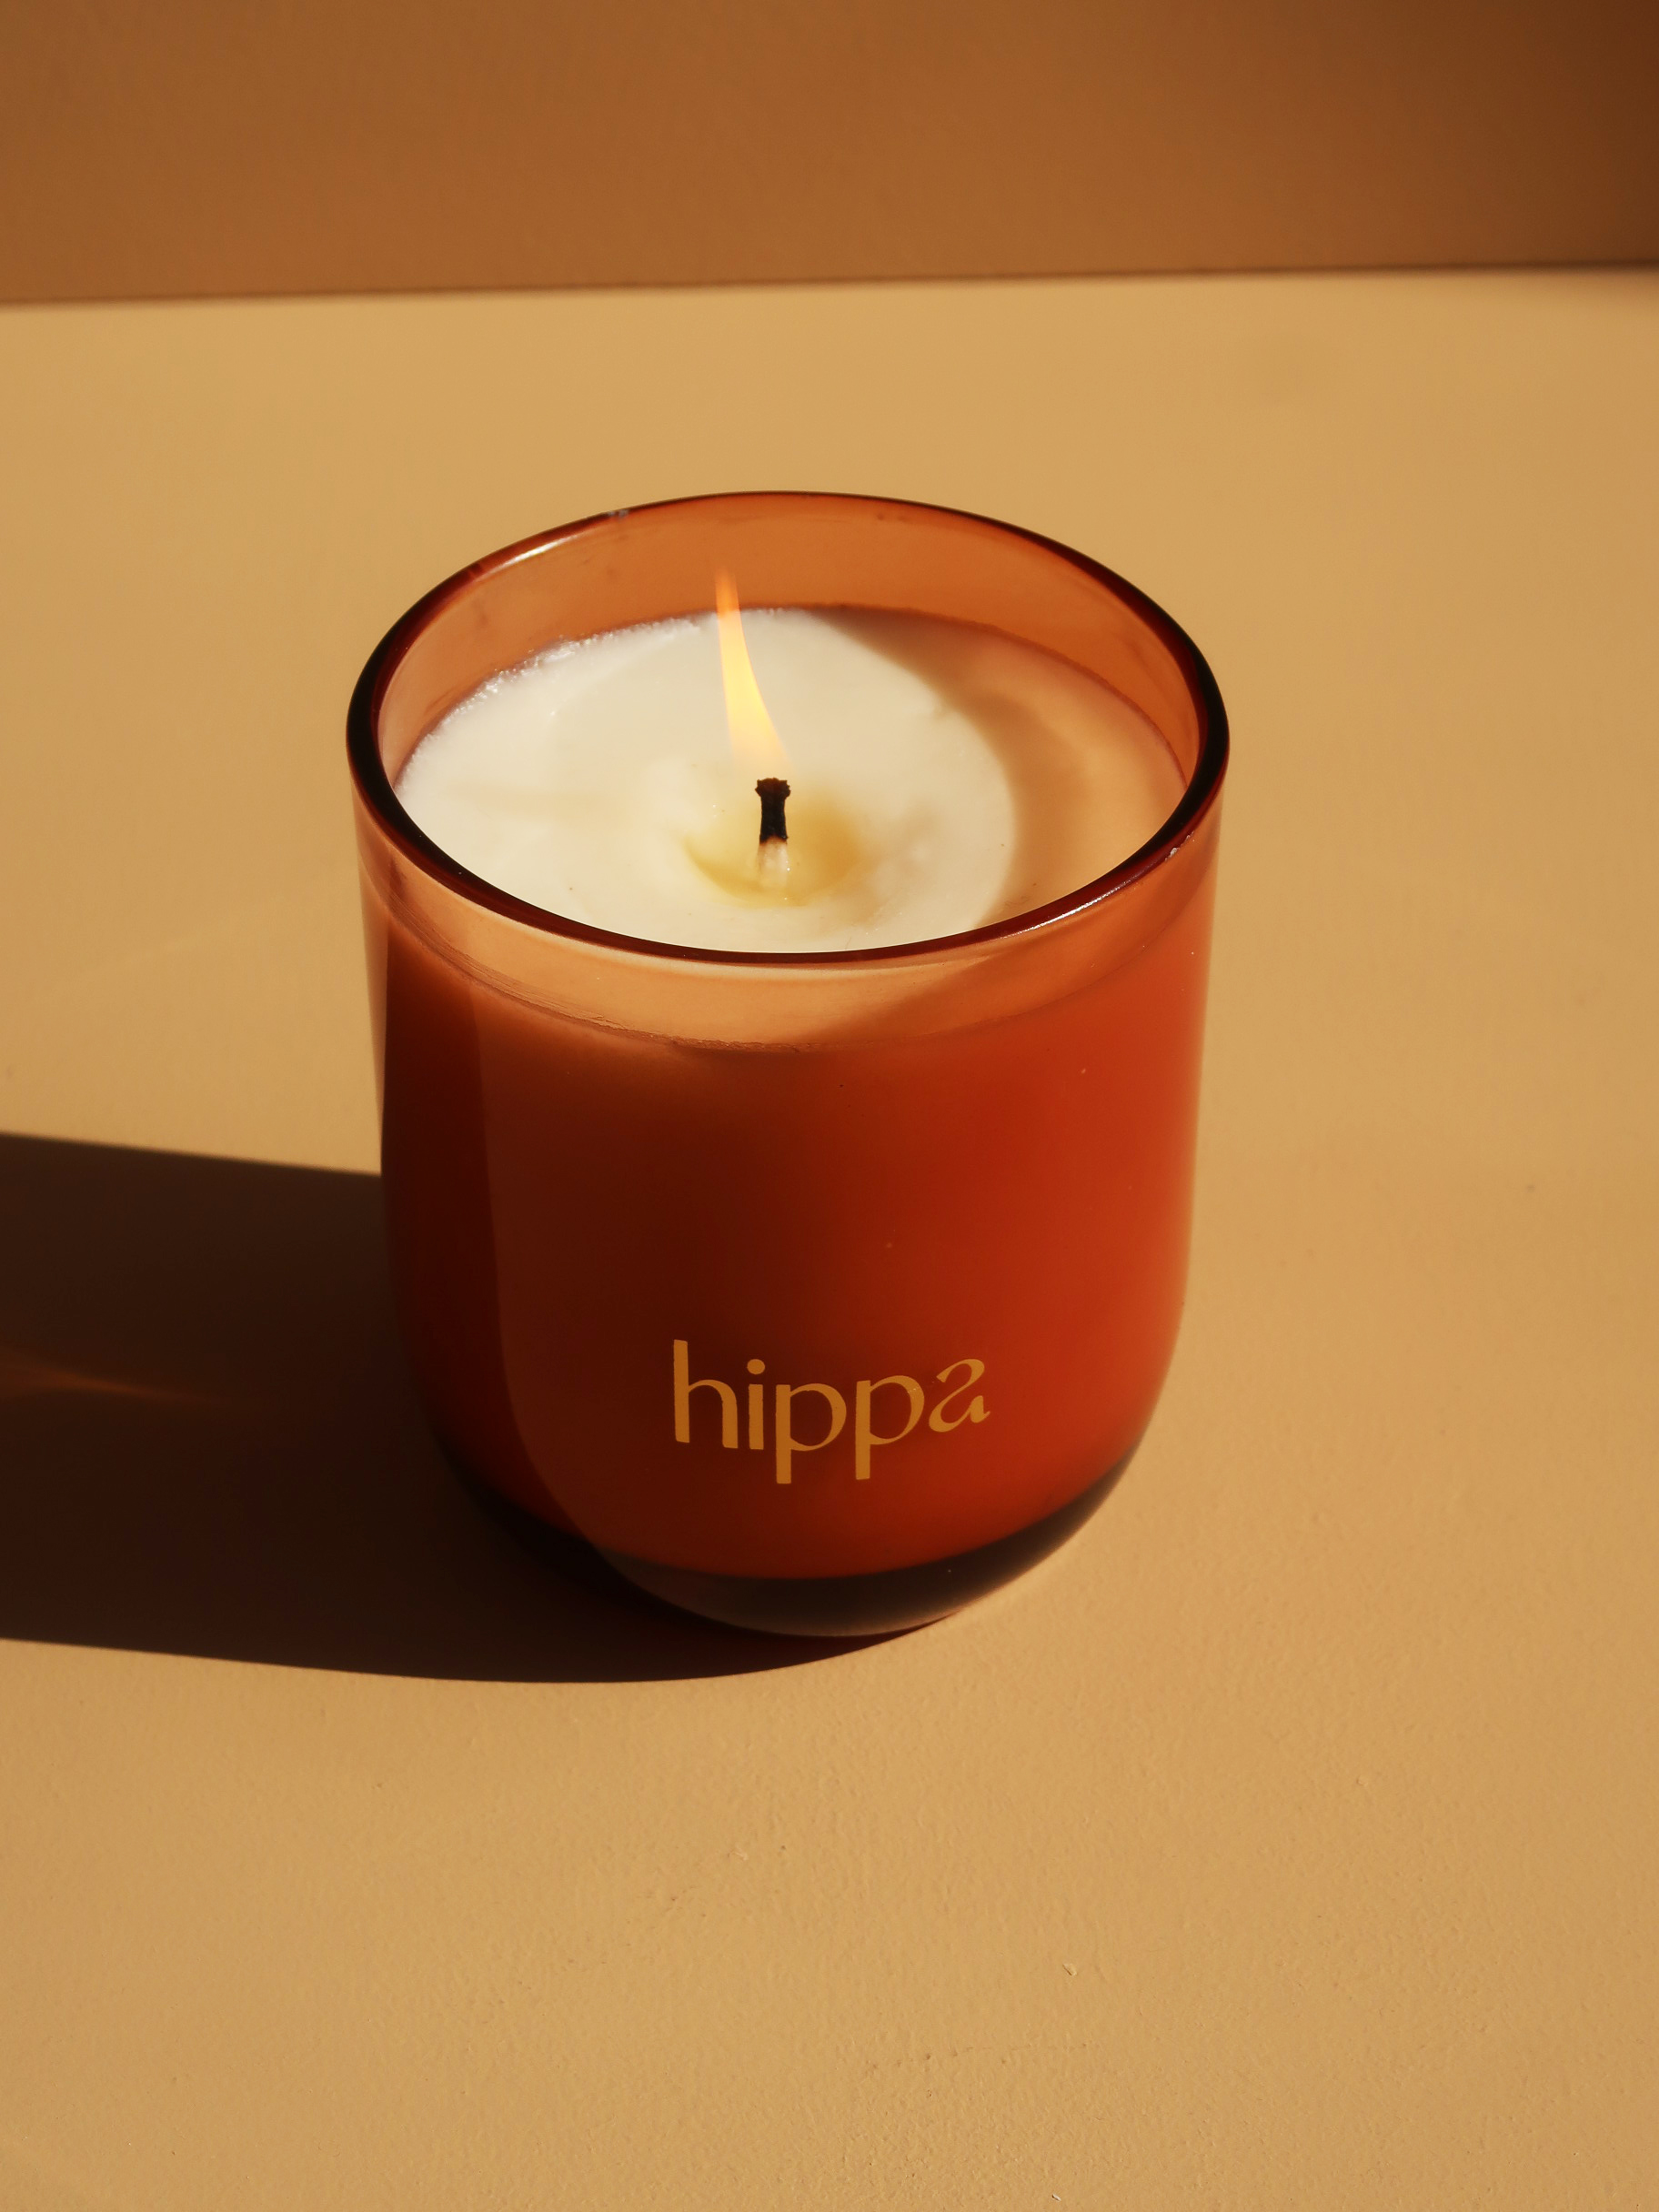 Botanica Hippa Scented Candle